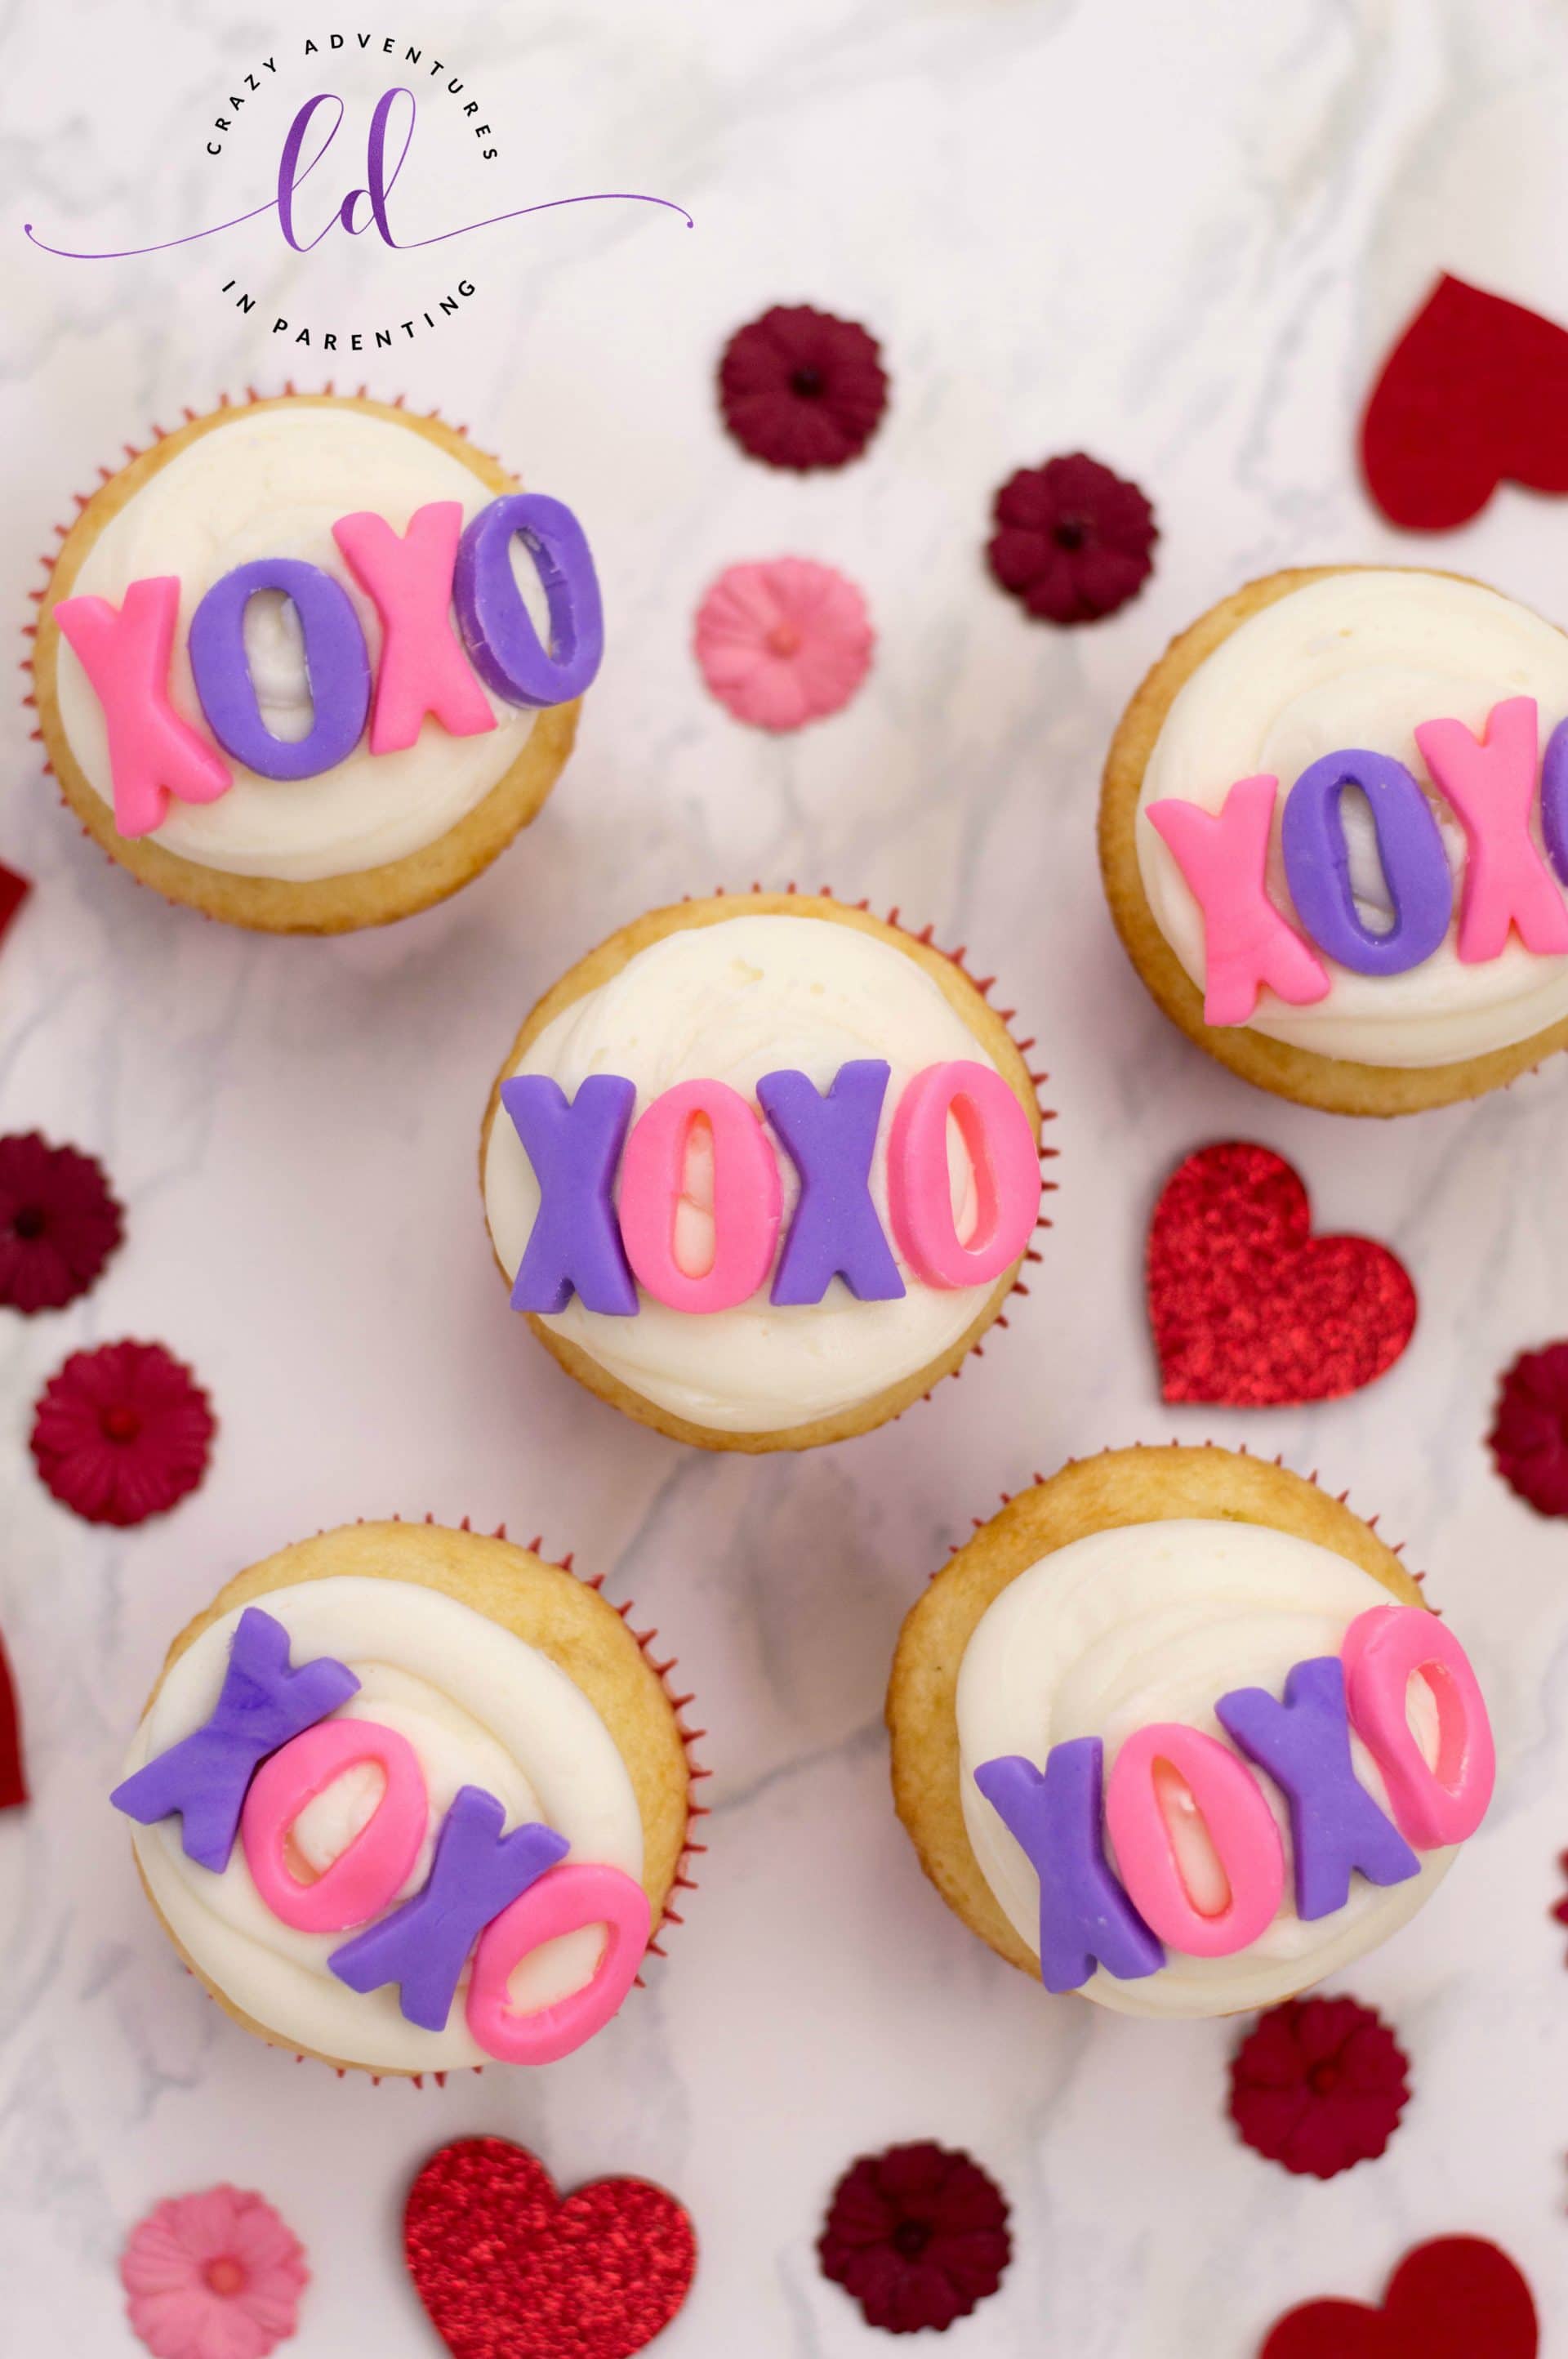 Simple XOXO Valentine's Cupcakes Recipe